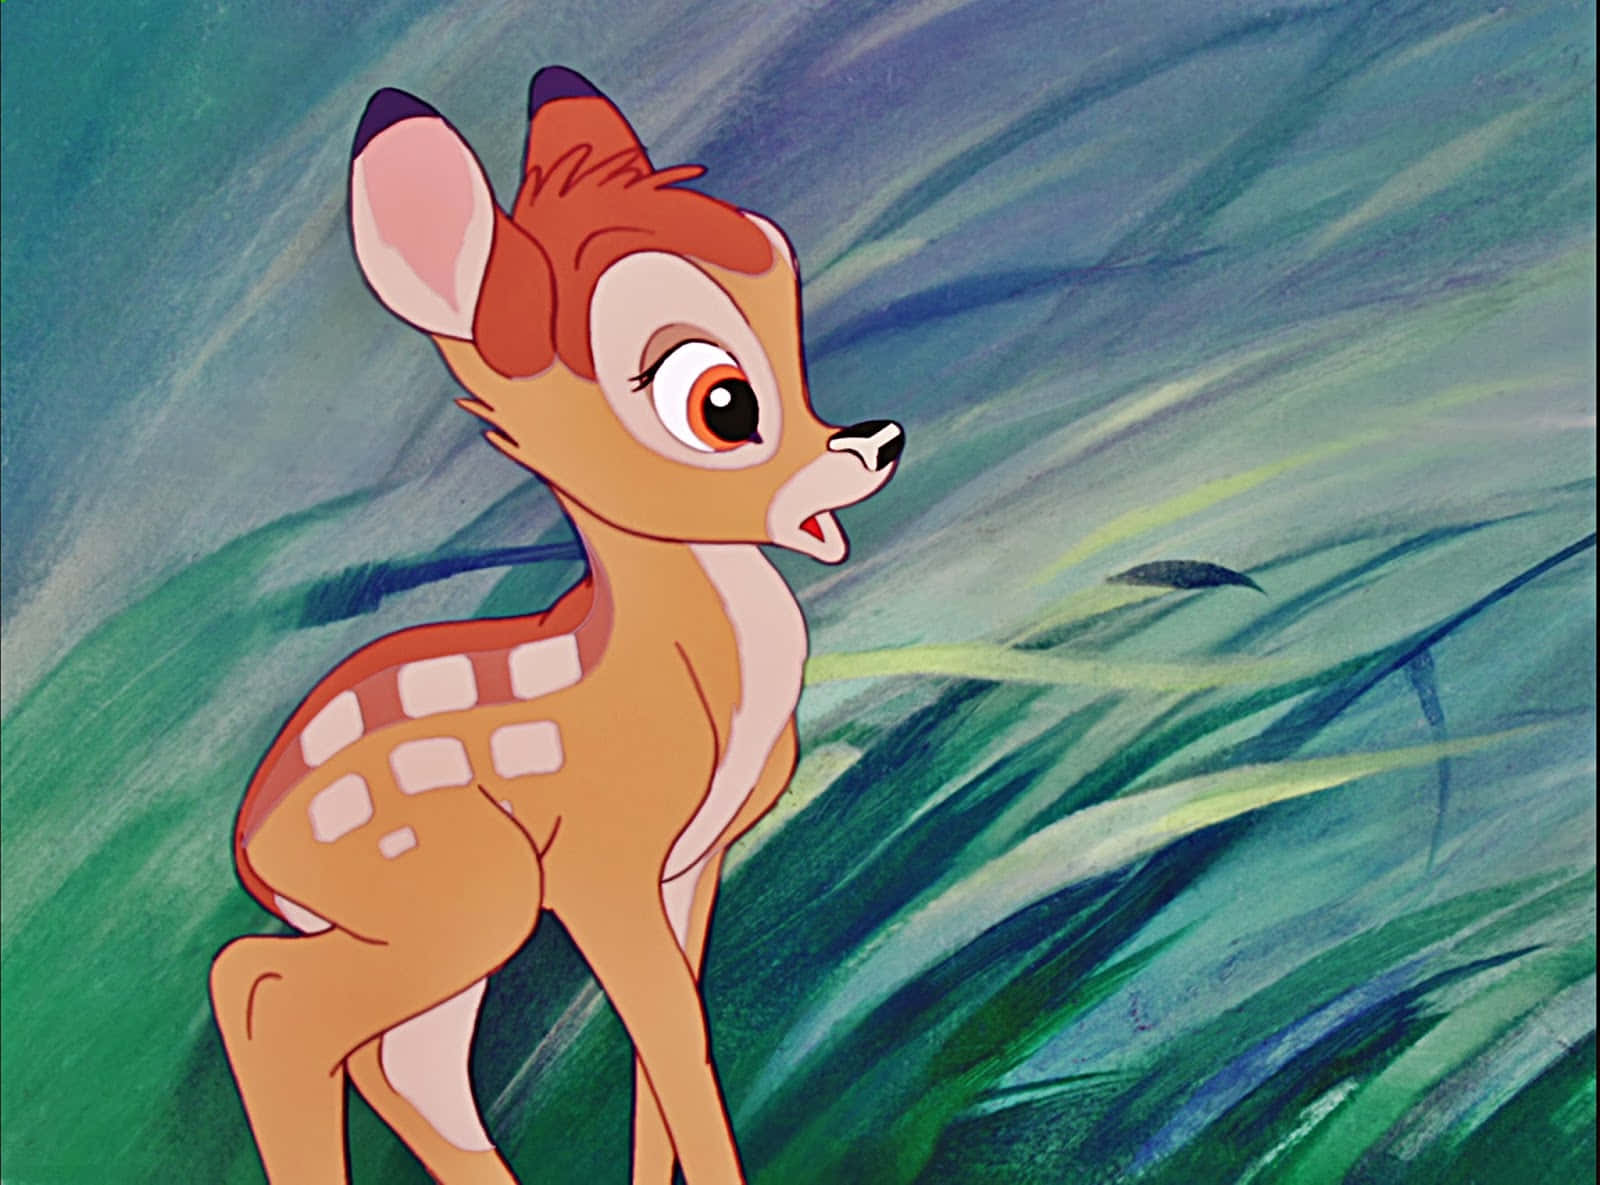 Disney's Bambi Sights the World